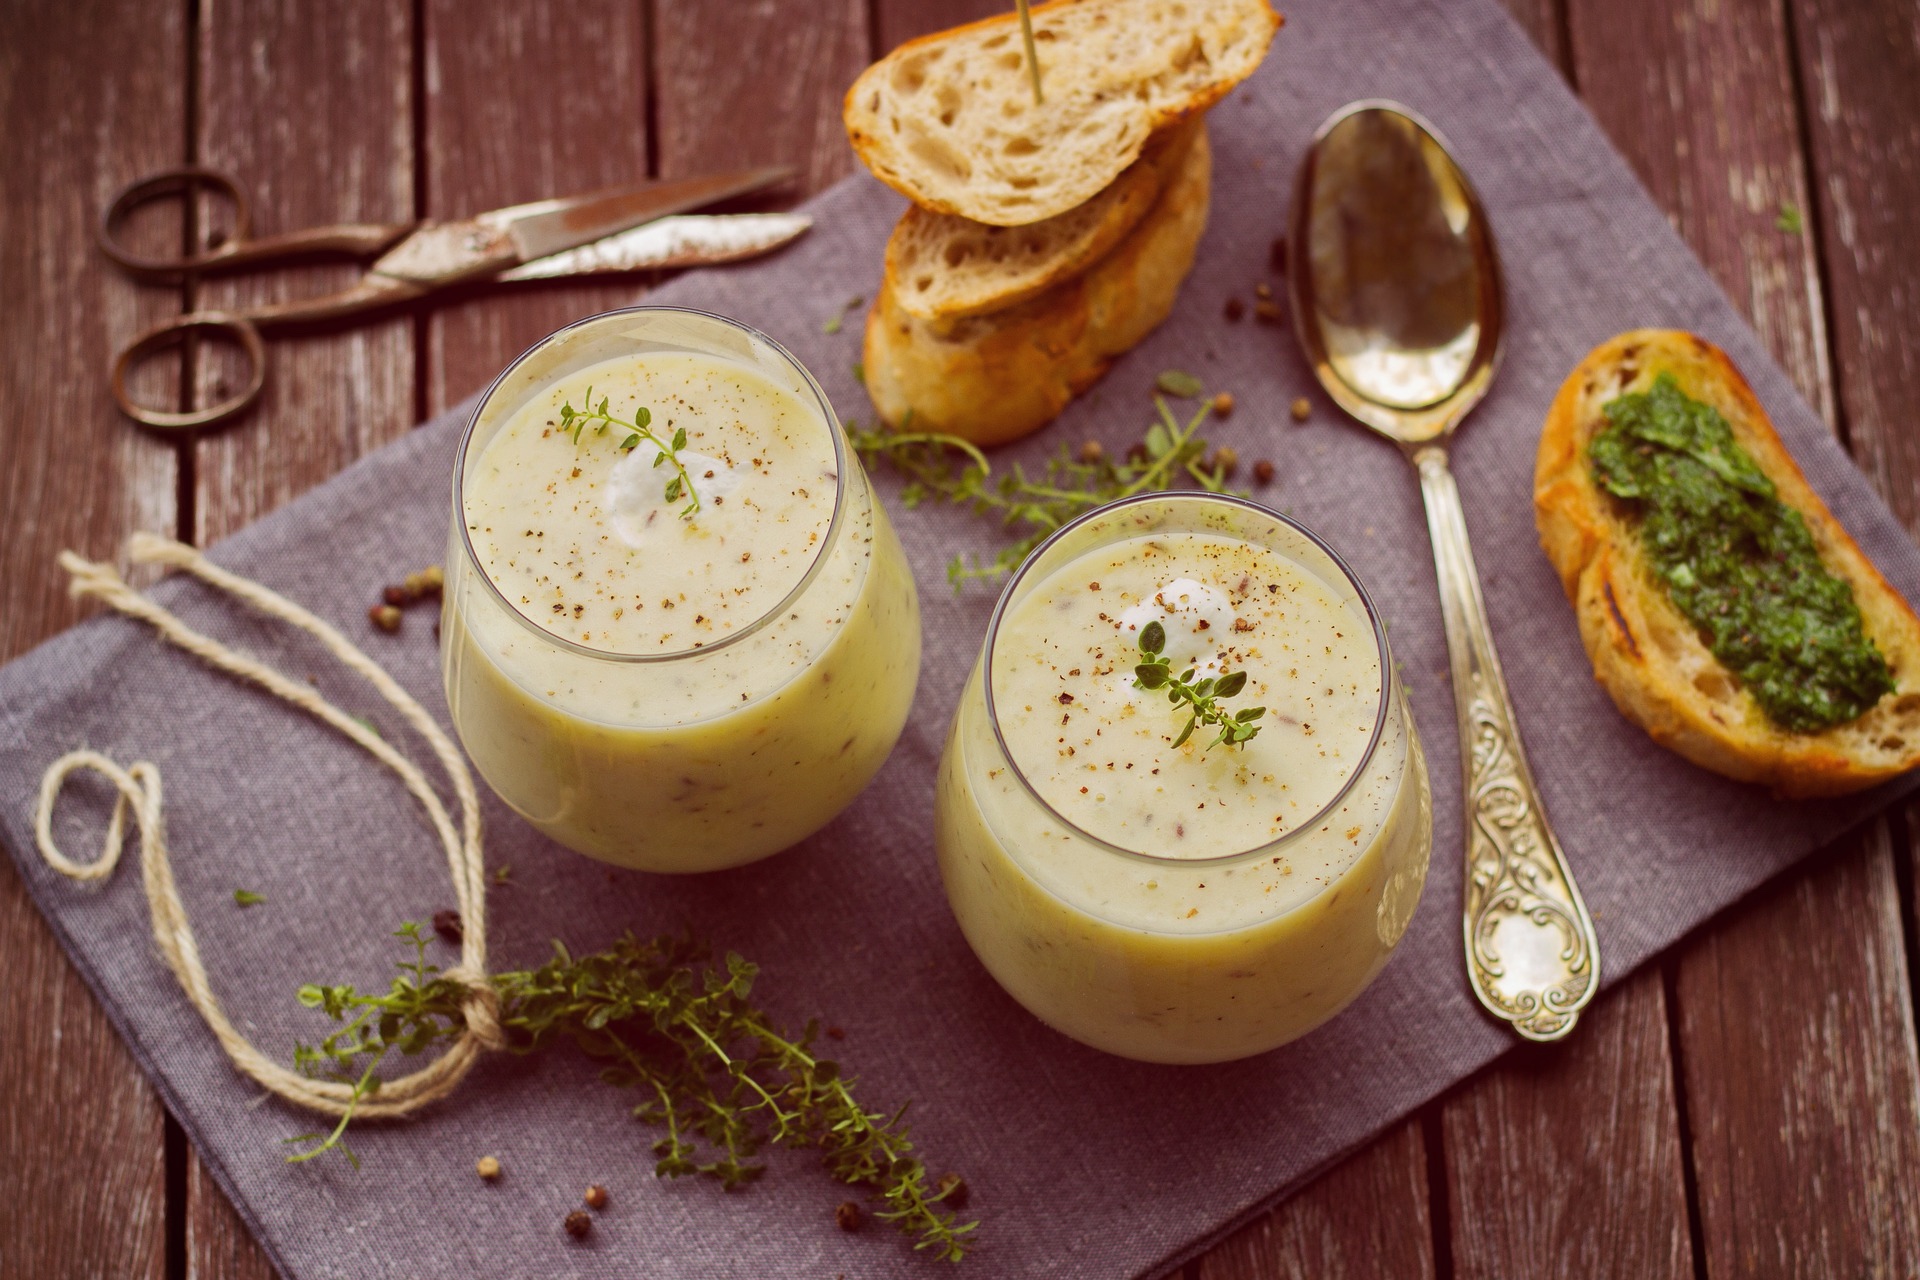 Creamy potato soup with thyme